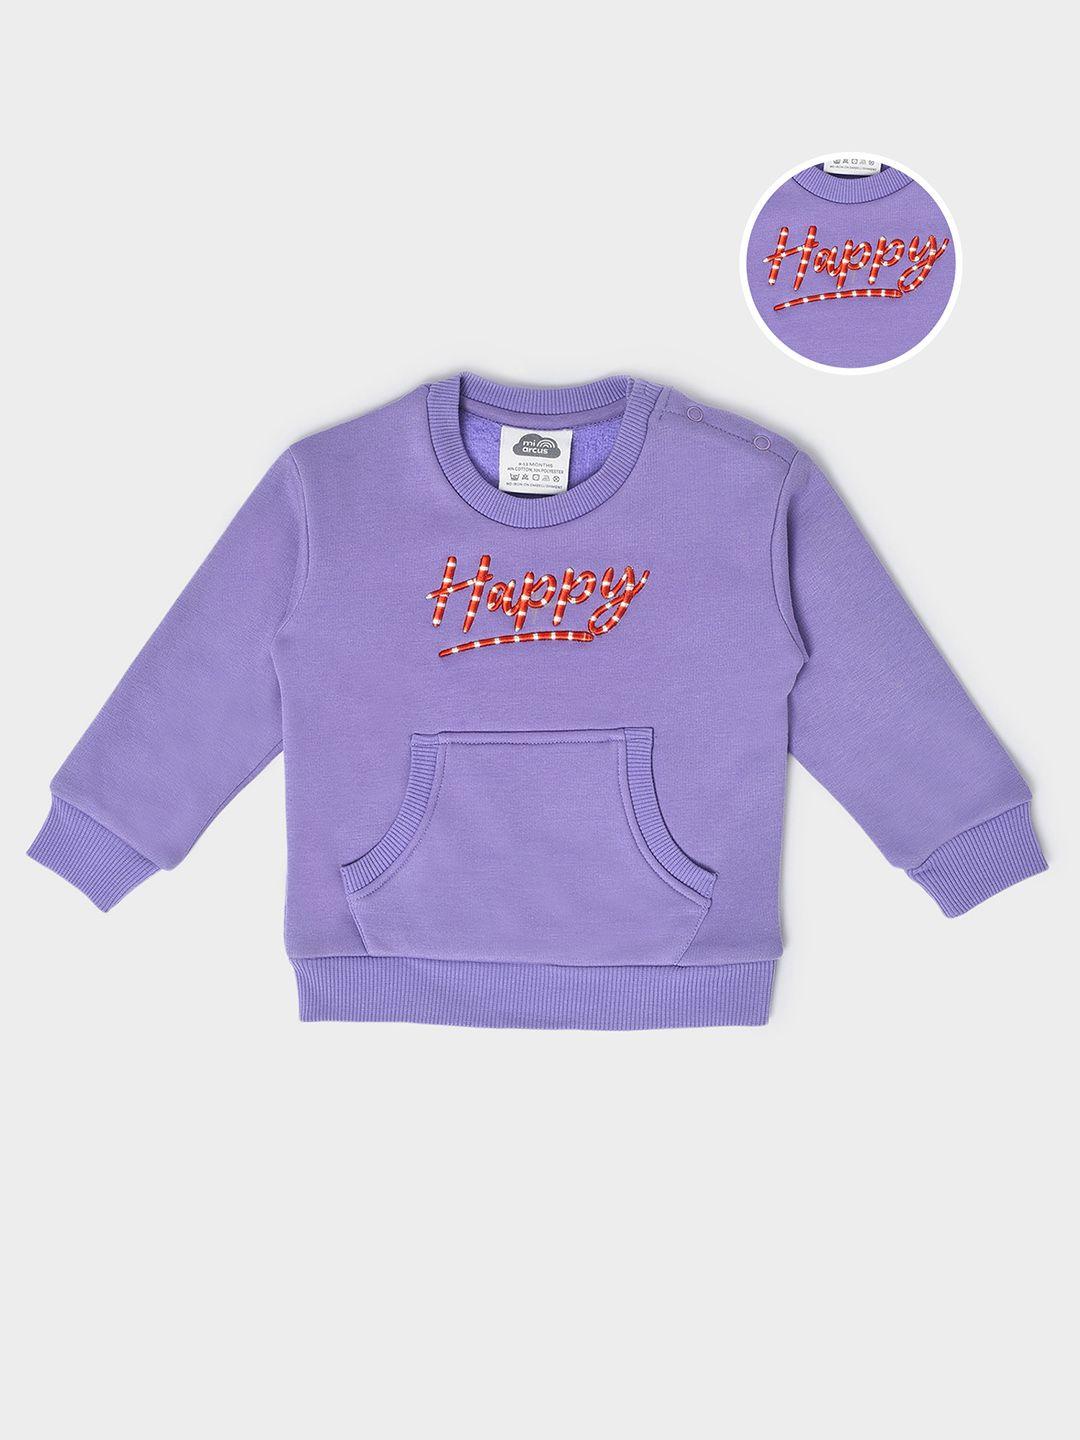 miarcus unisex kids typography embroidered pullover sweatshirt